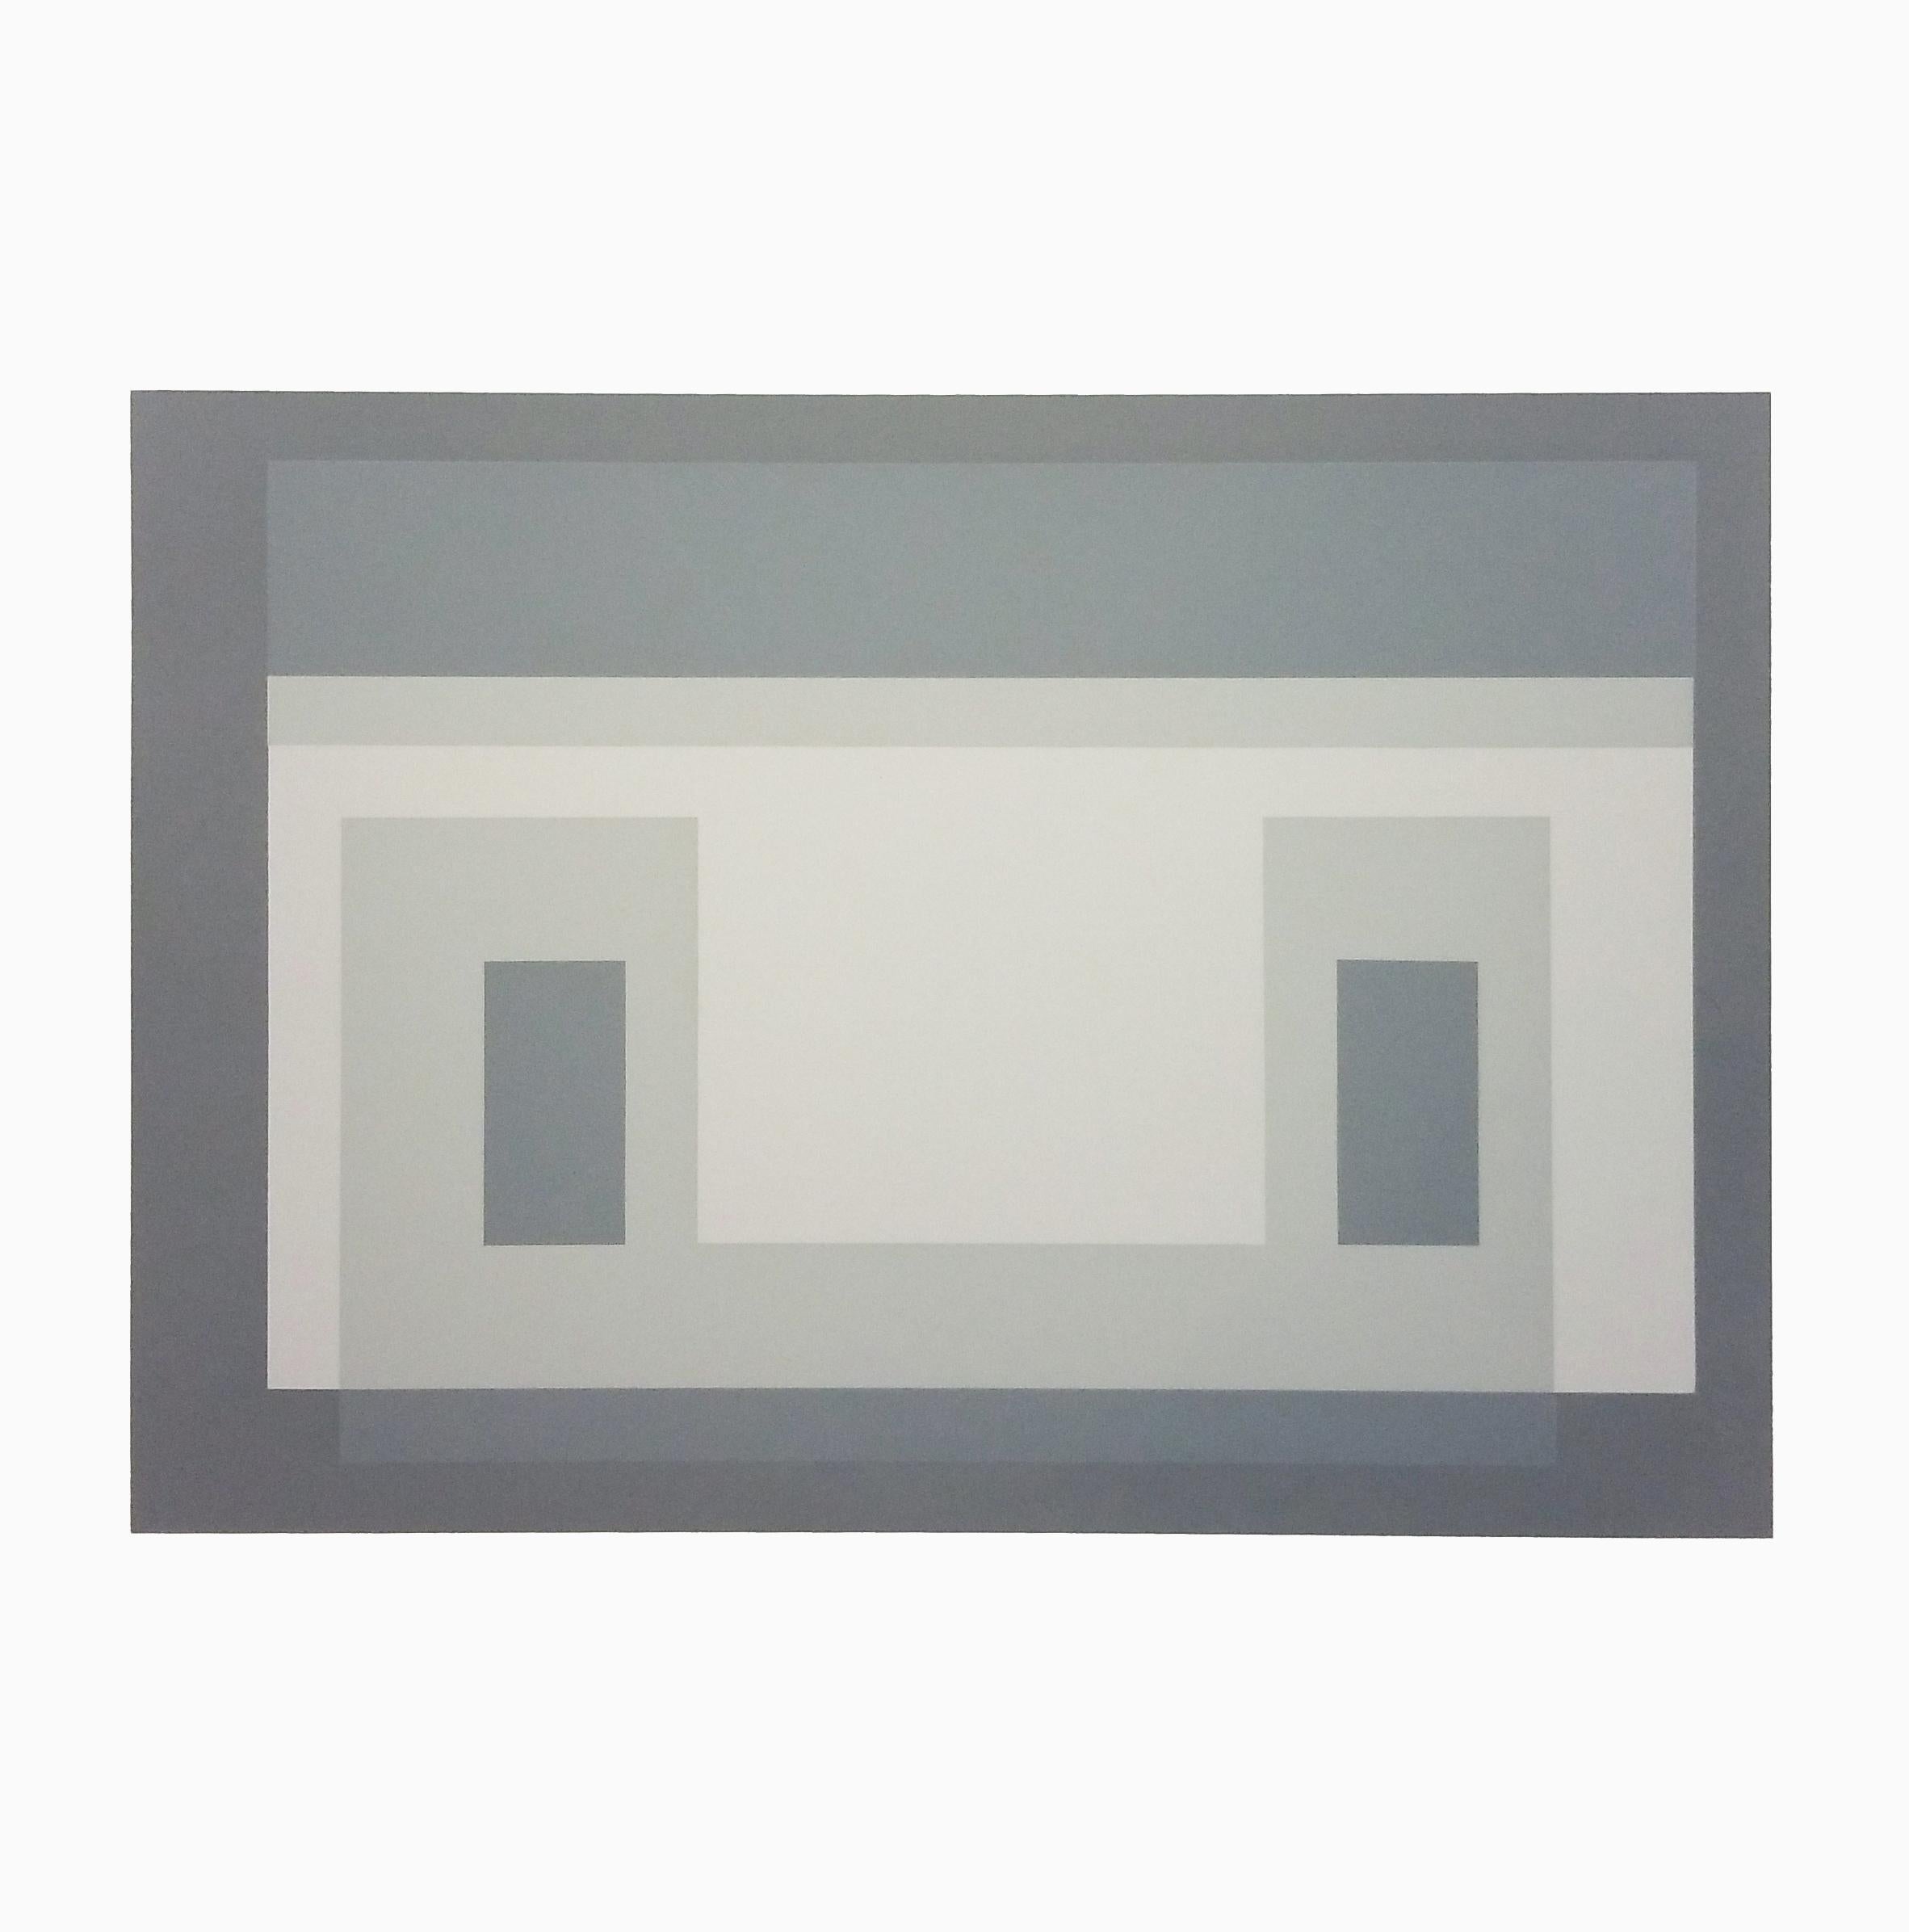 Josef Albers Abstract Print - Variant III from Ten Variants